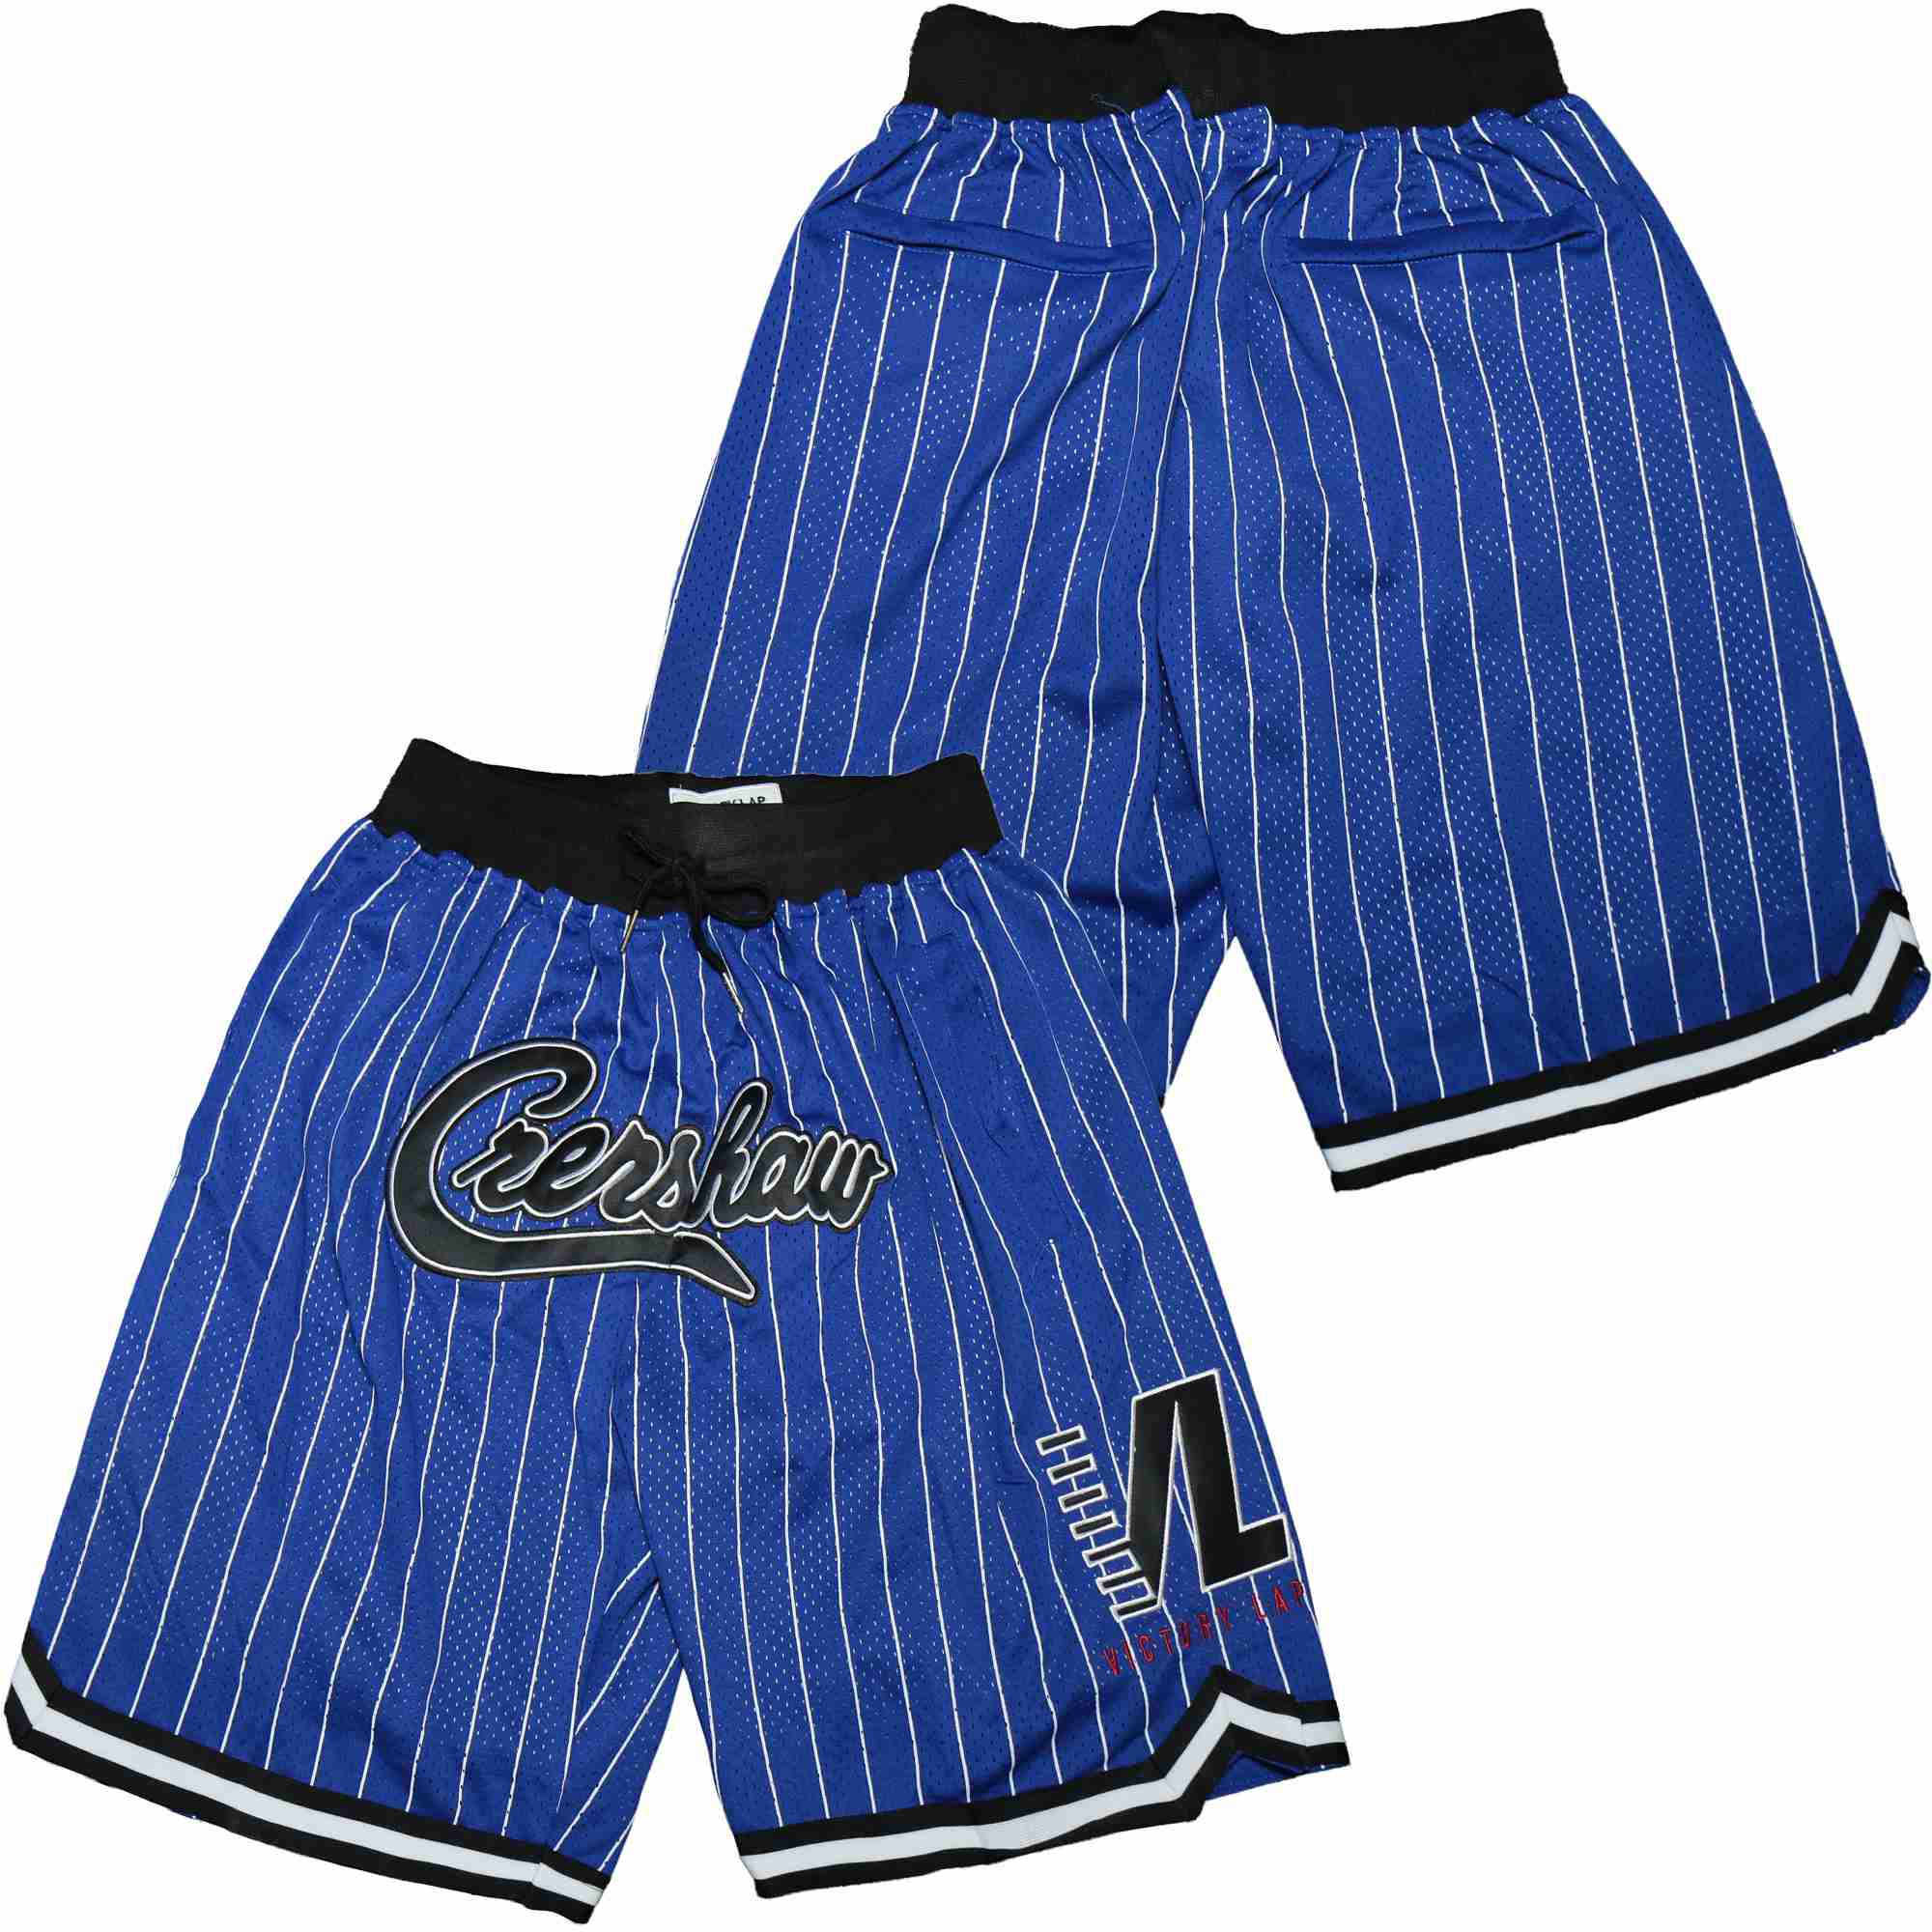 Crenshaw Royal Blue And White PinstripeI Basjetball Shorts2021618